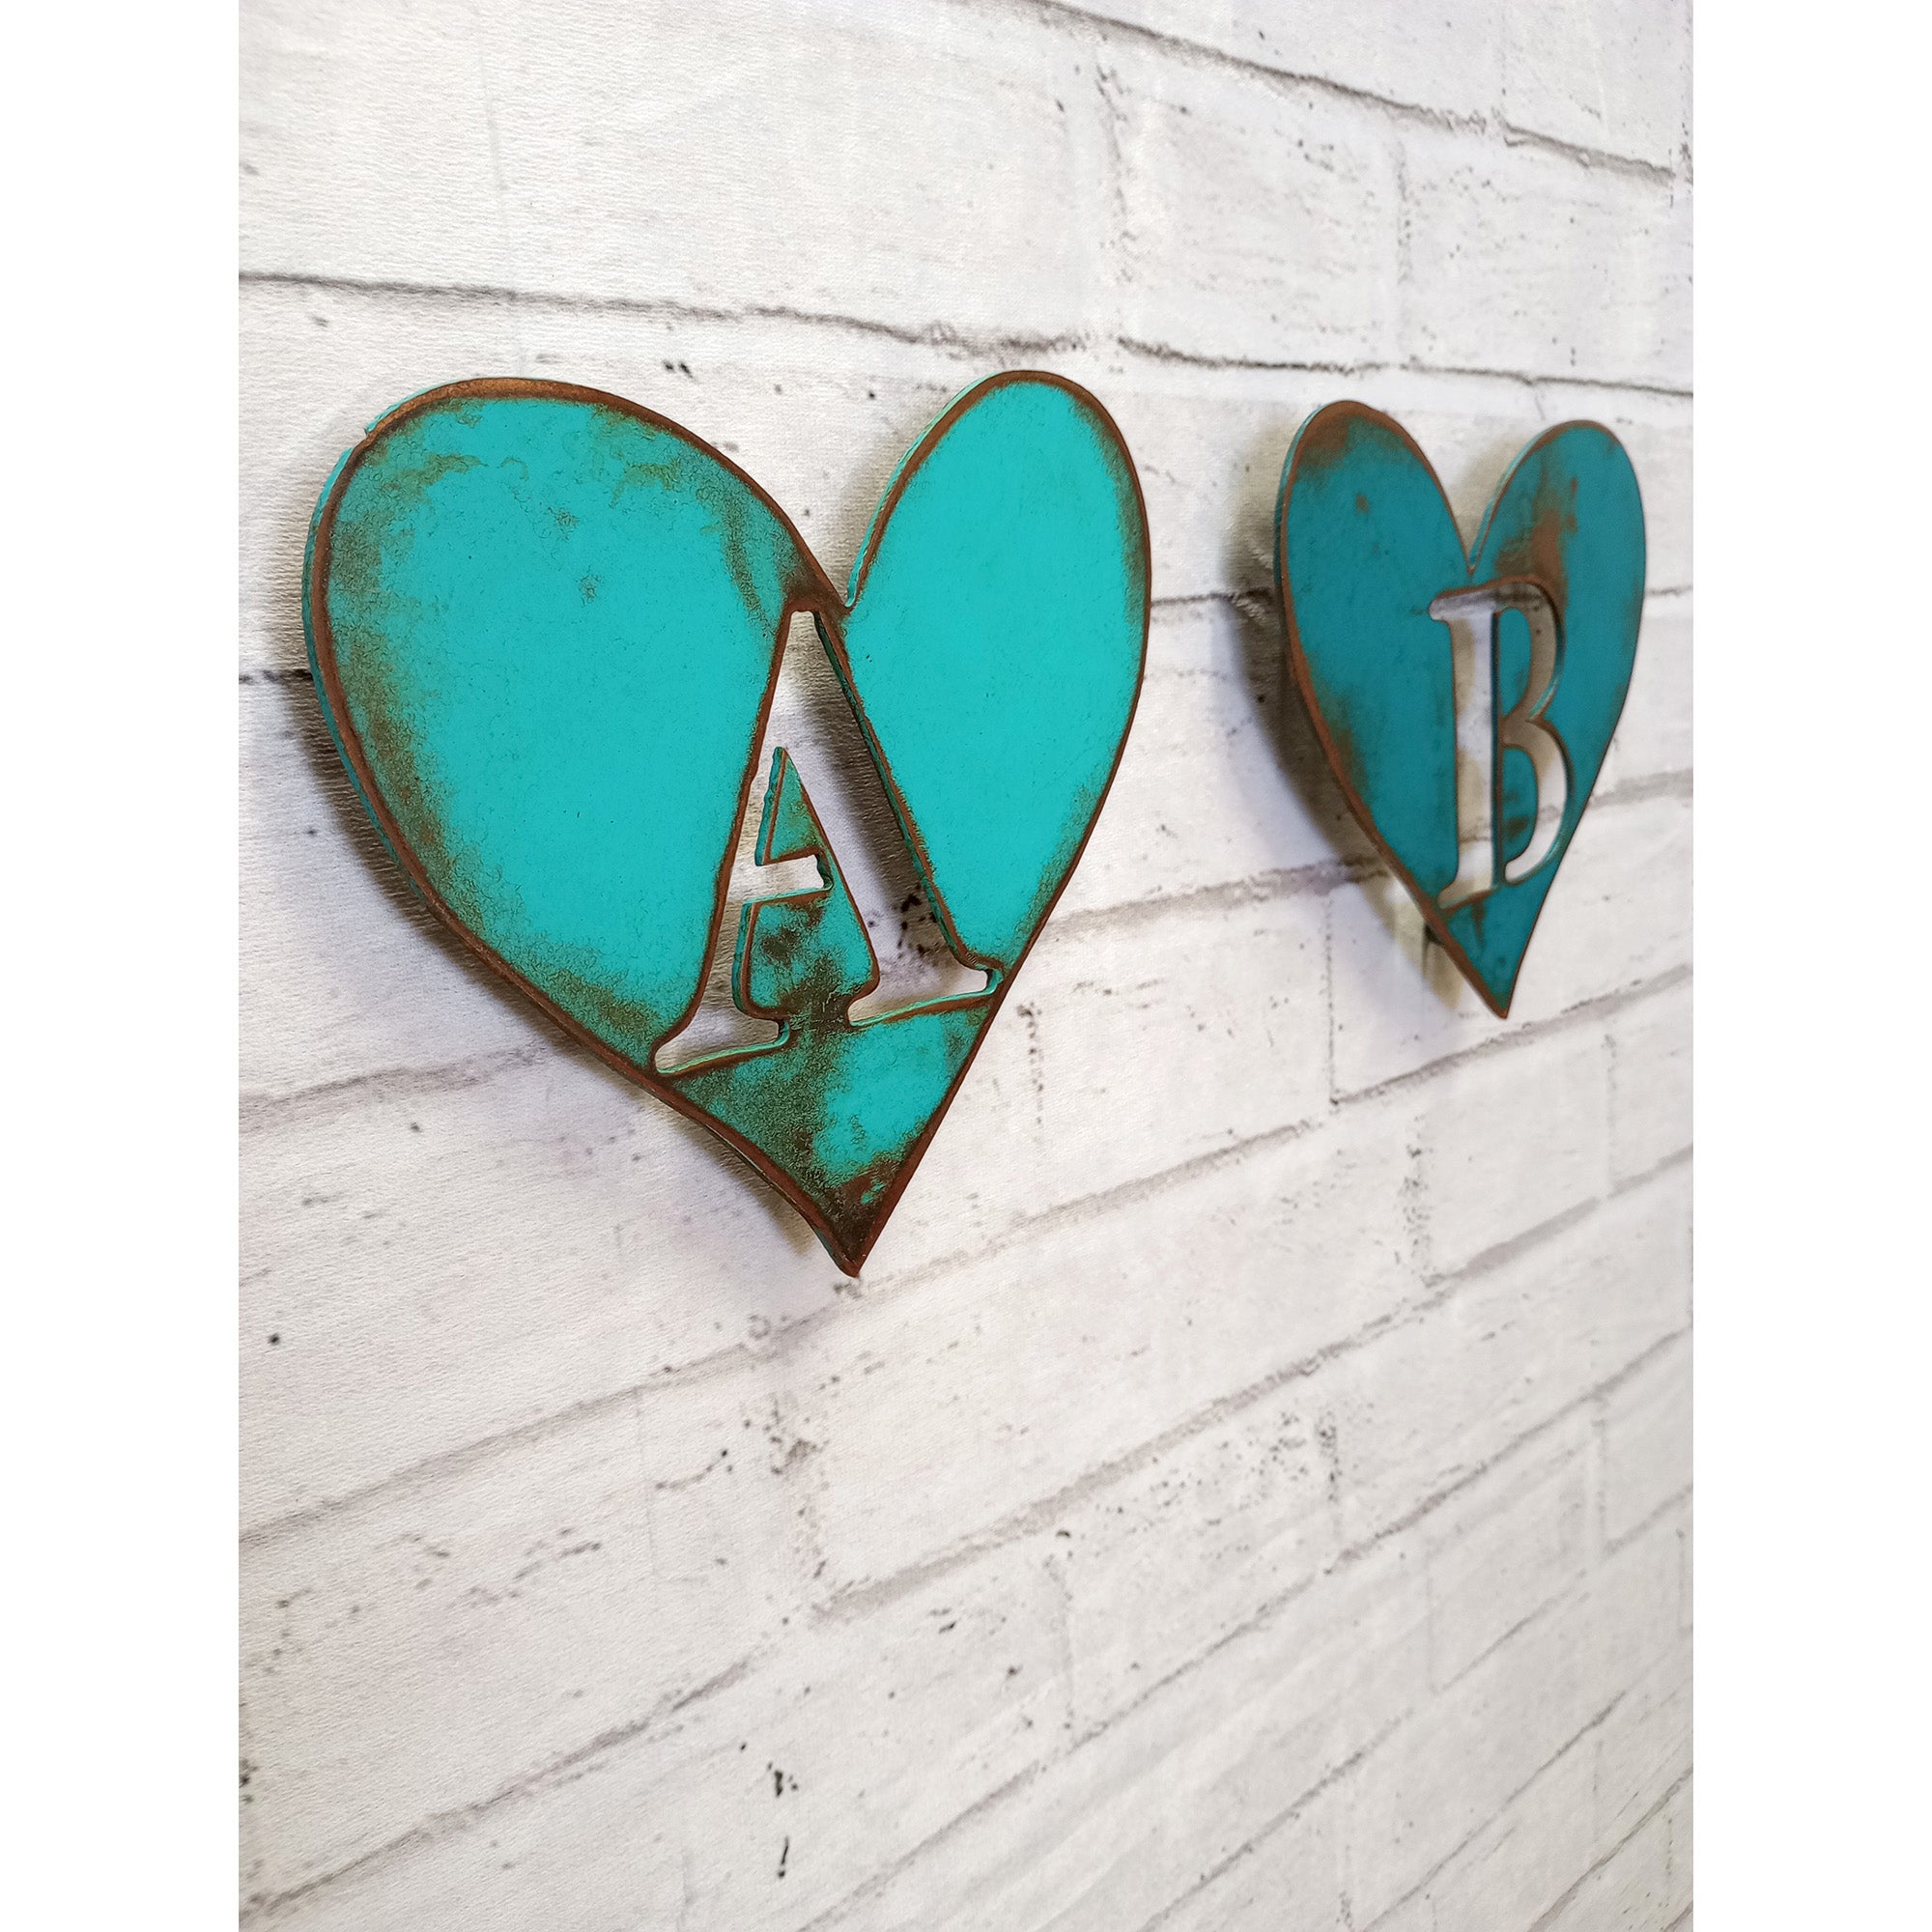 Wooden Hearts. Wood Heart Decor. Handmade Rustic Heart Wall Hangings